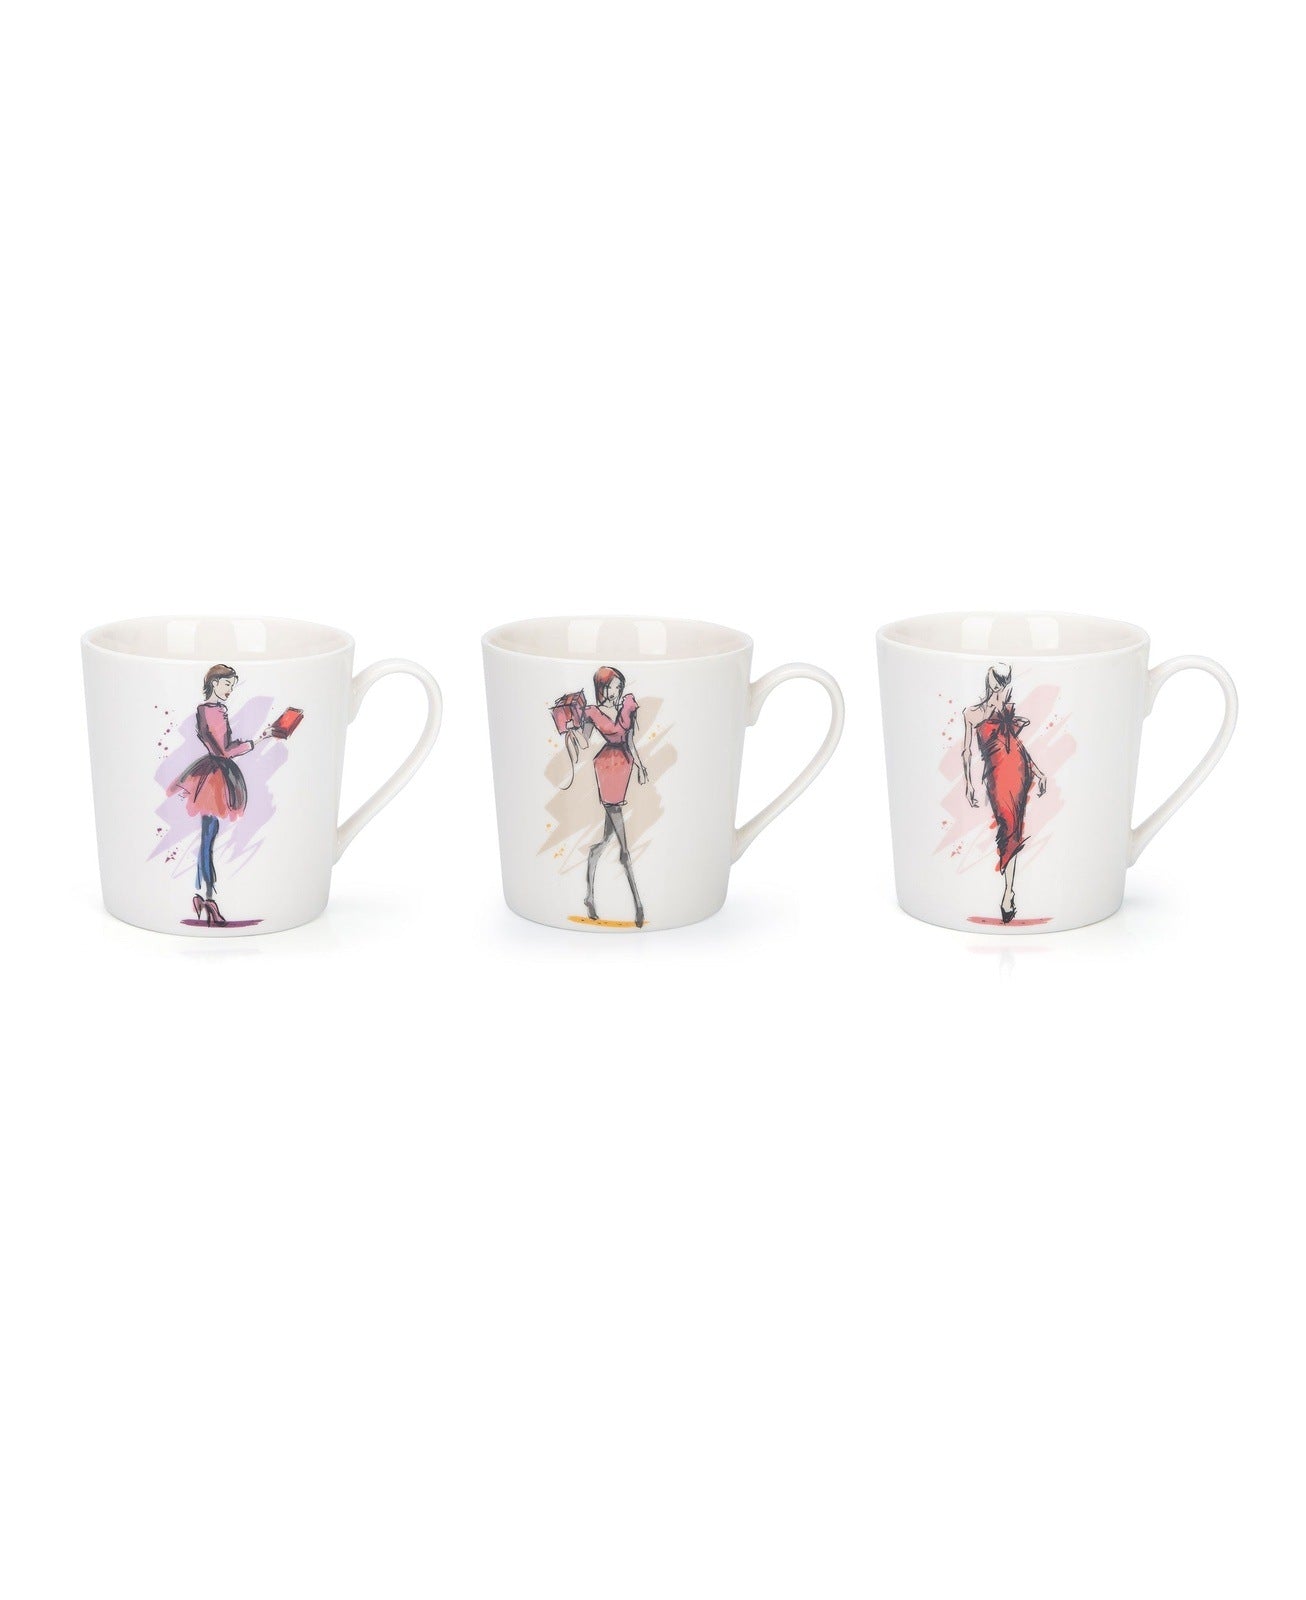 Mindy Brownes High Fashion Set Of 6 Mugs - White 1 Shaws Department Stores